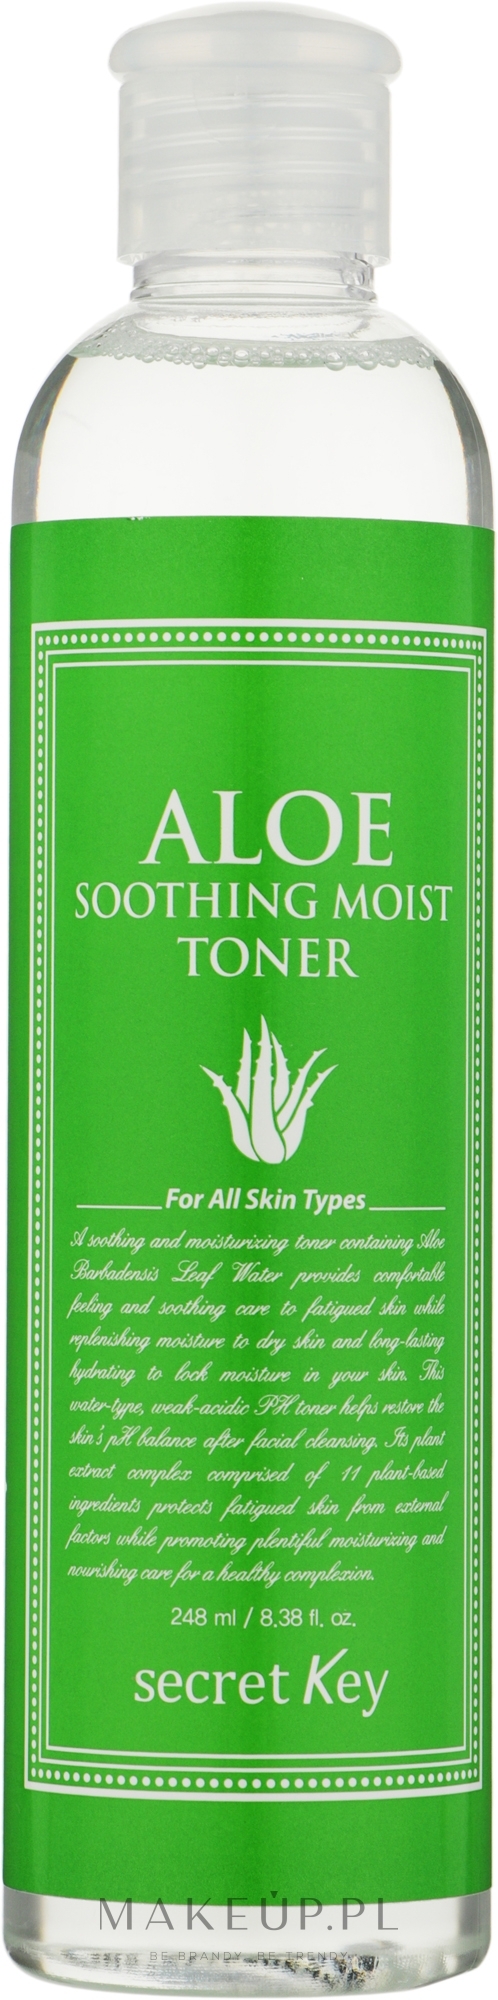 Tonik do twarzy - Secret Key Aloe Soothing Moist Toner (248ml) — Zdjęcie 248 ml